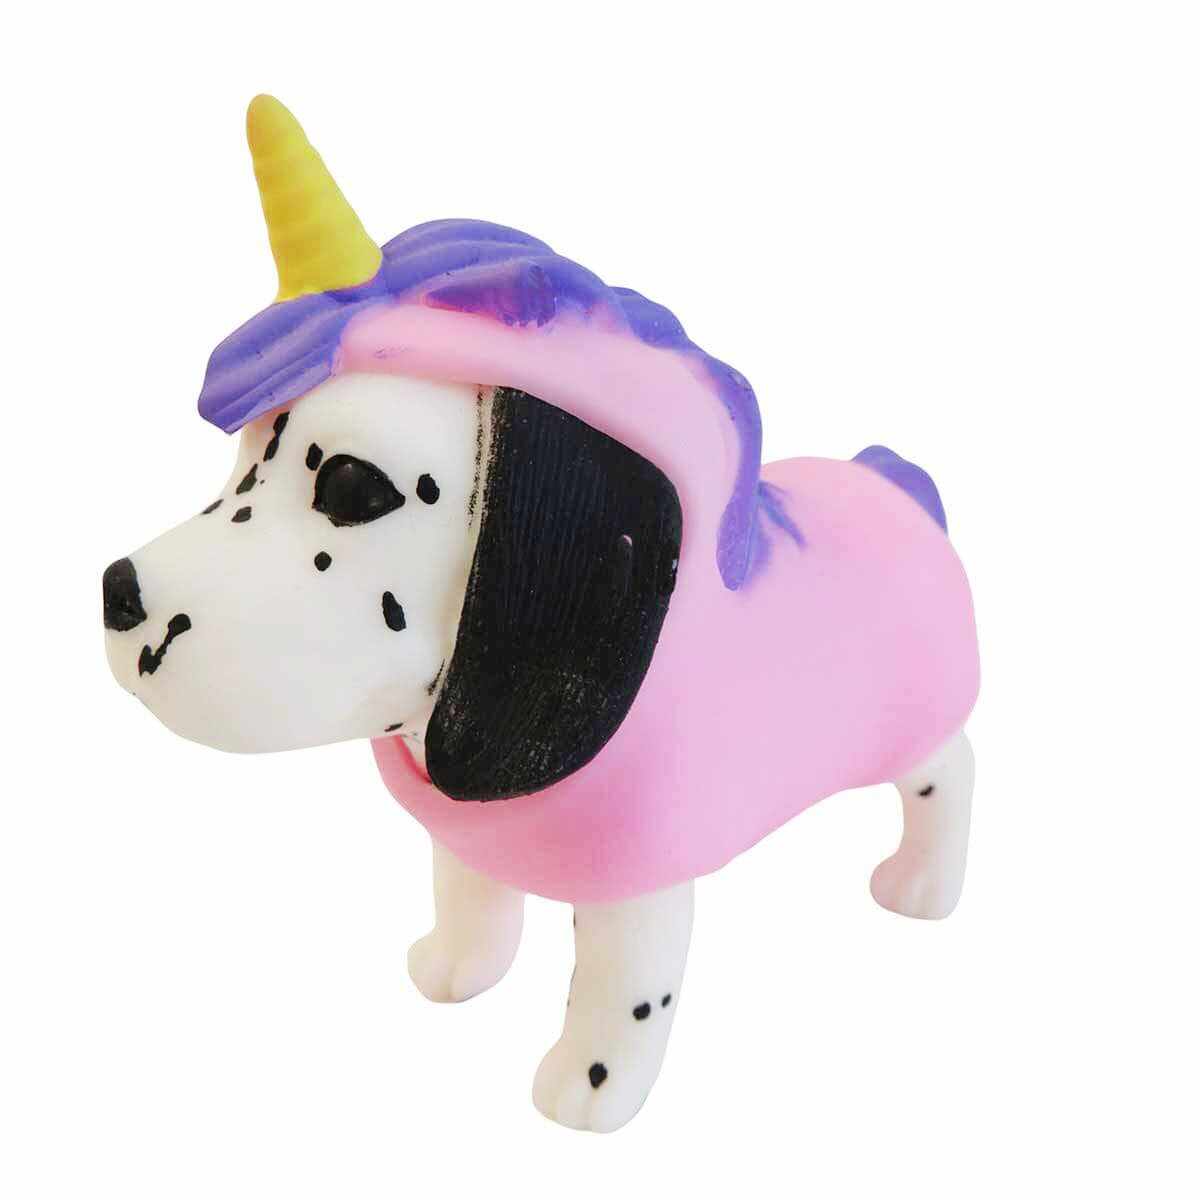 Mini figurina, Dress Your Puppy, Dalmatian in costum de unicorn, S1